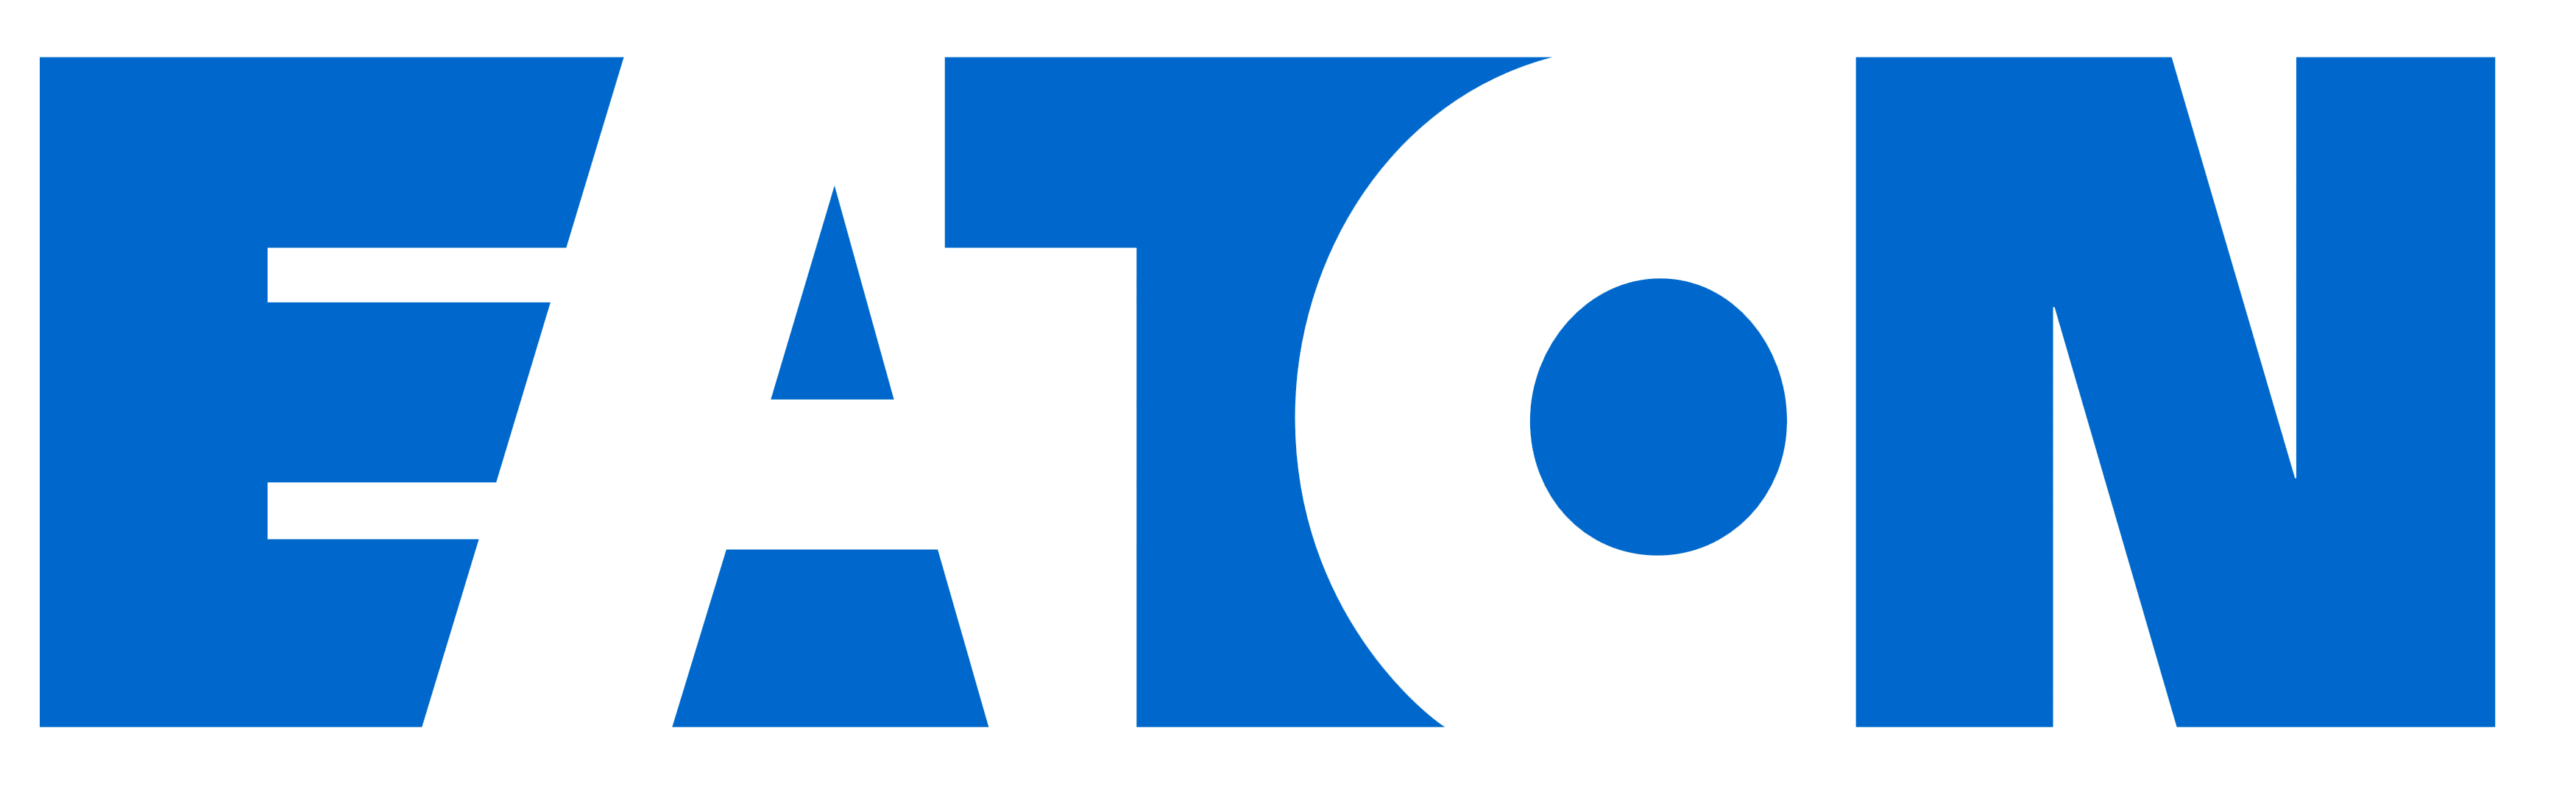 Eaton_logo